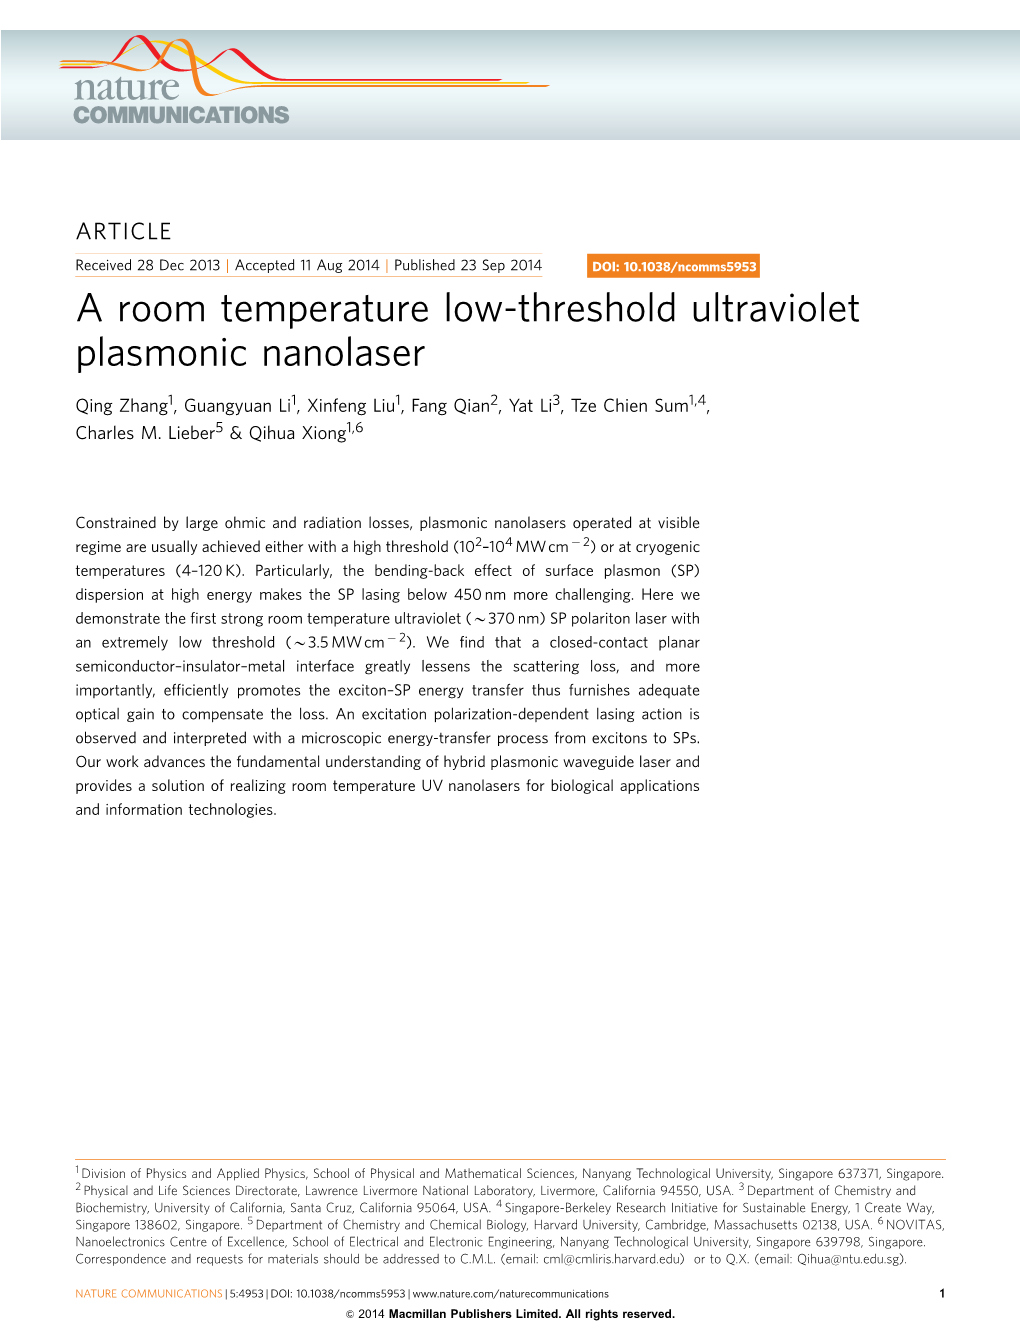 A Room Temperature Low-Threshold Ultraviolet Plasmonic Nanolaser